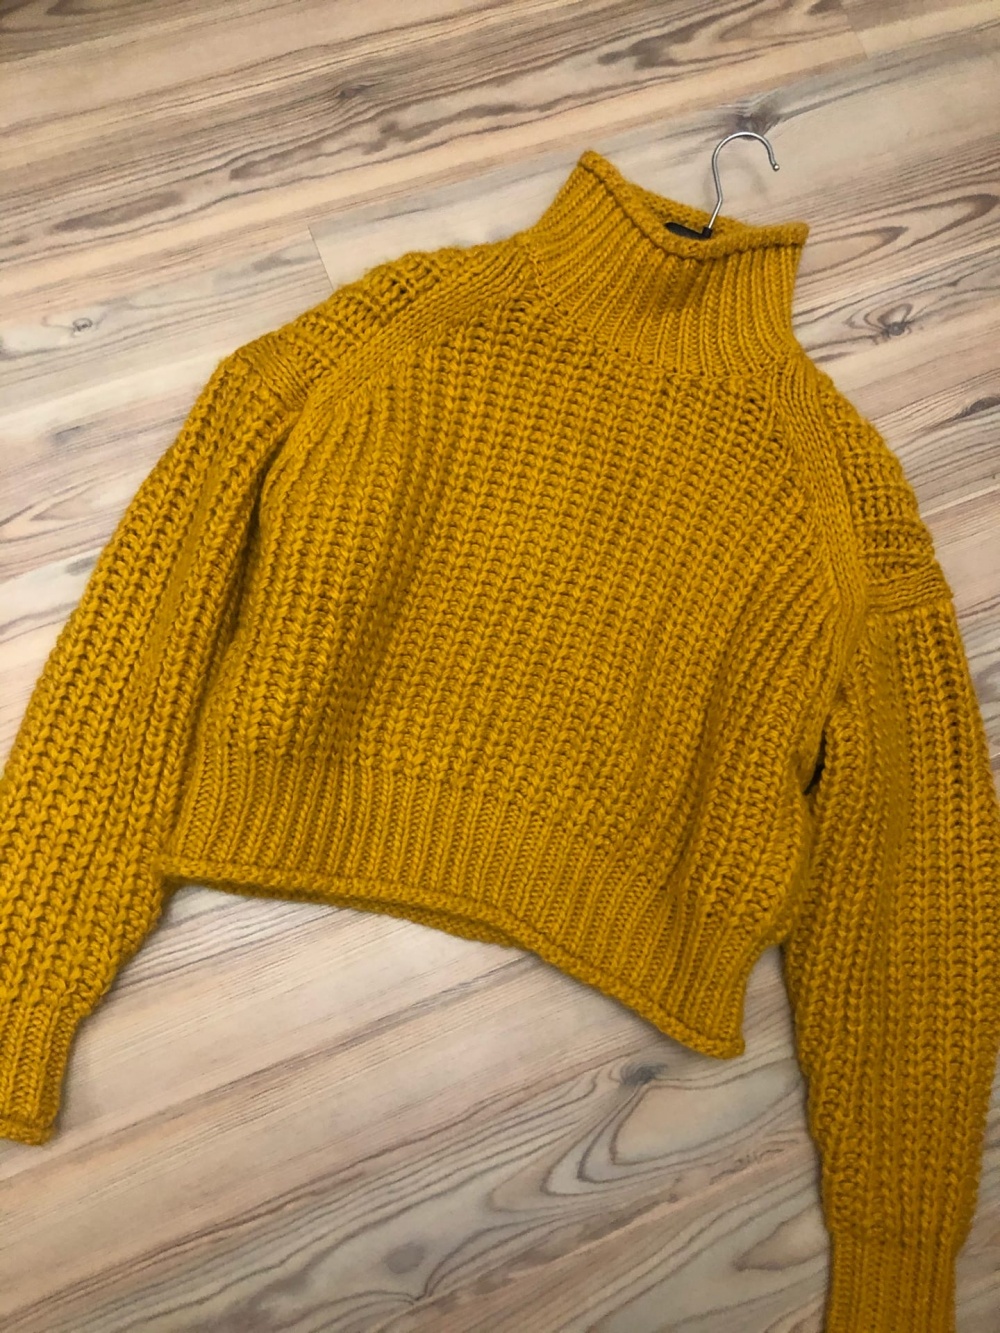 Кроп-свитер  H&M . Размер М-L-XL.